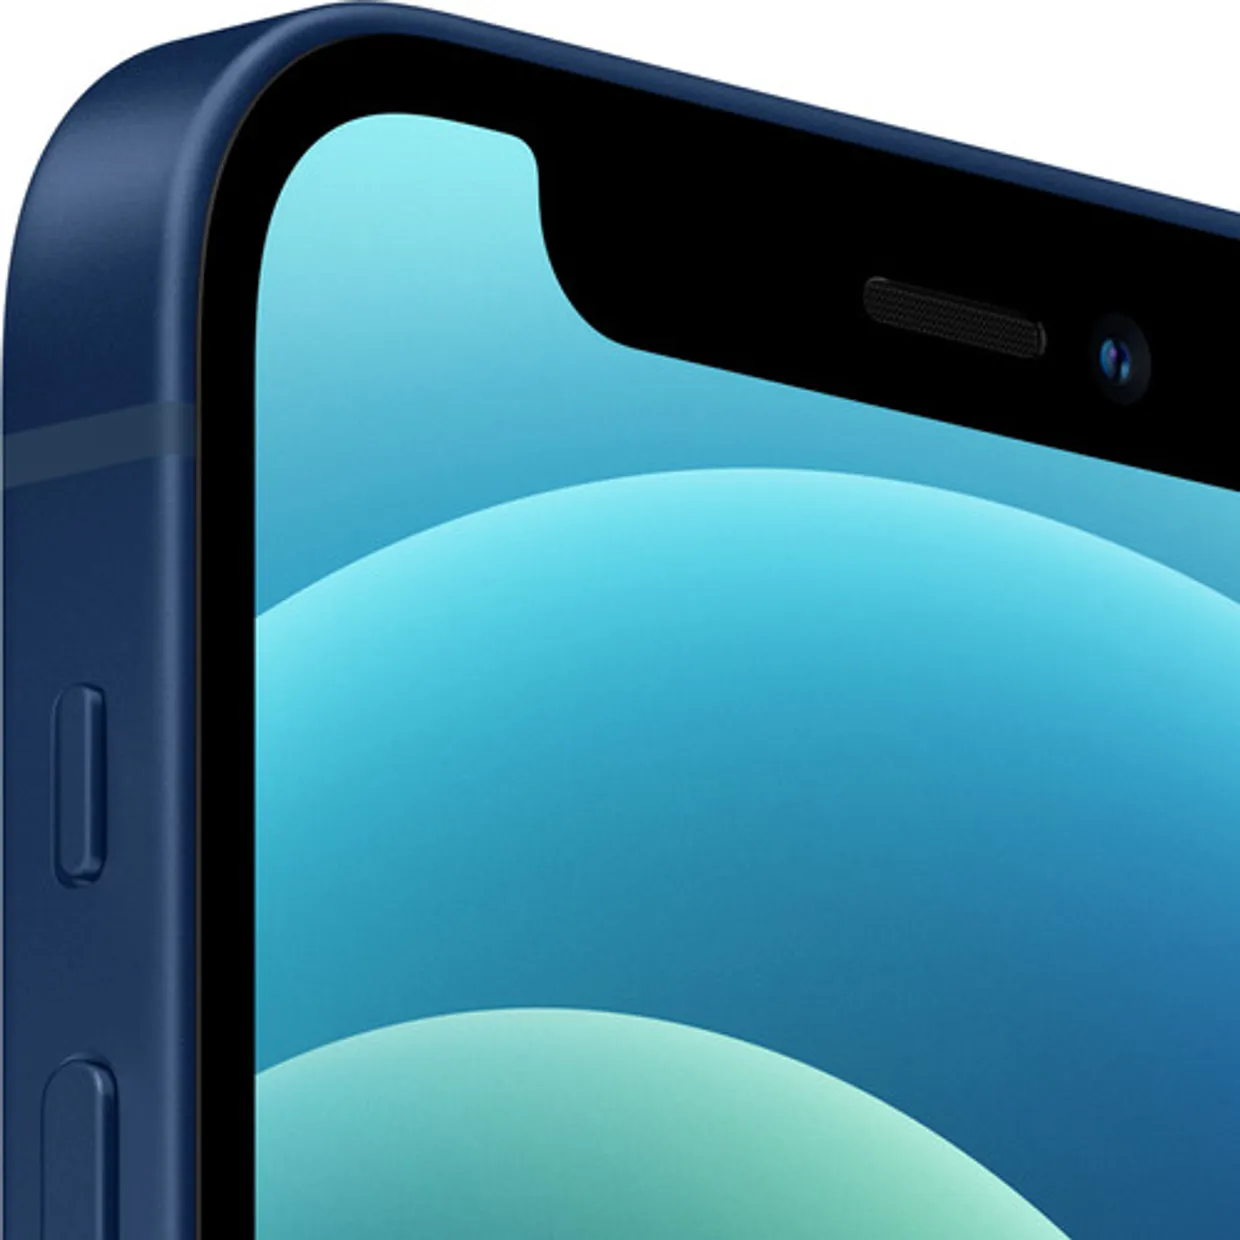 Apple iPhone 12 Mini - 64GB - Blauw